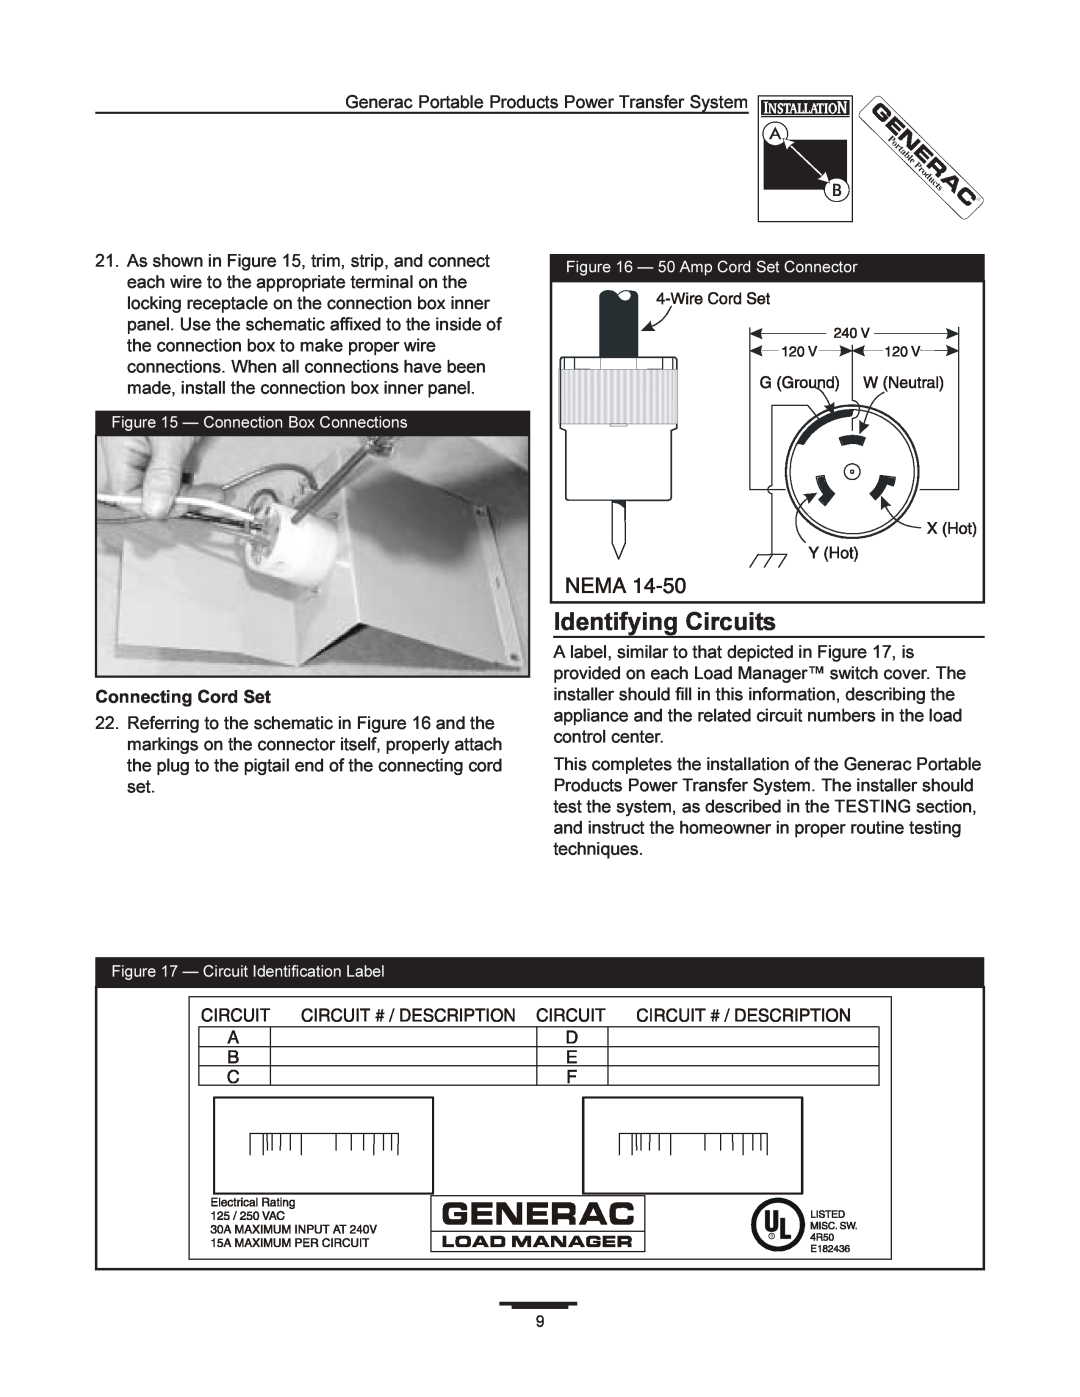 Generac 1403-0 manual Identifying Circuits, Connecting Cord Set 